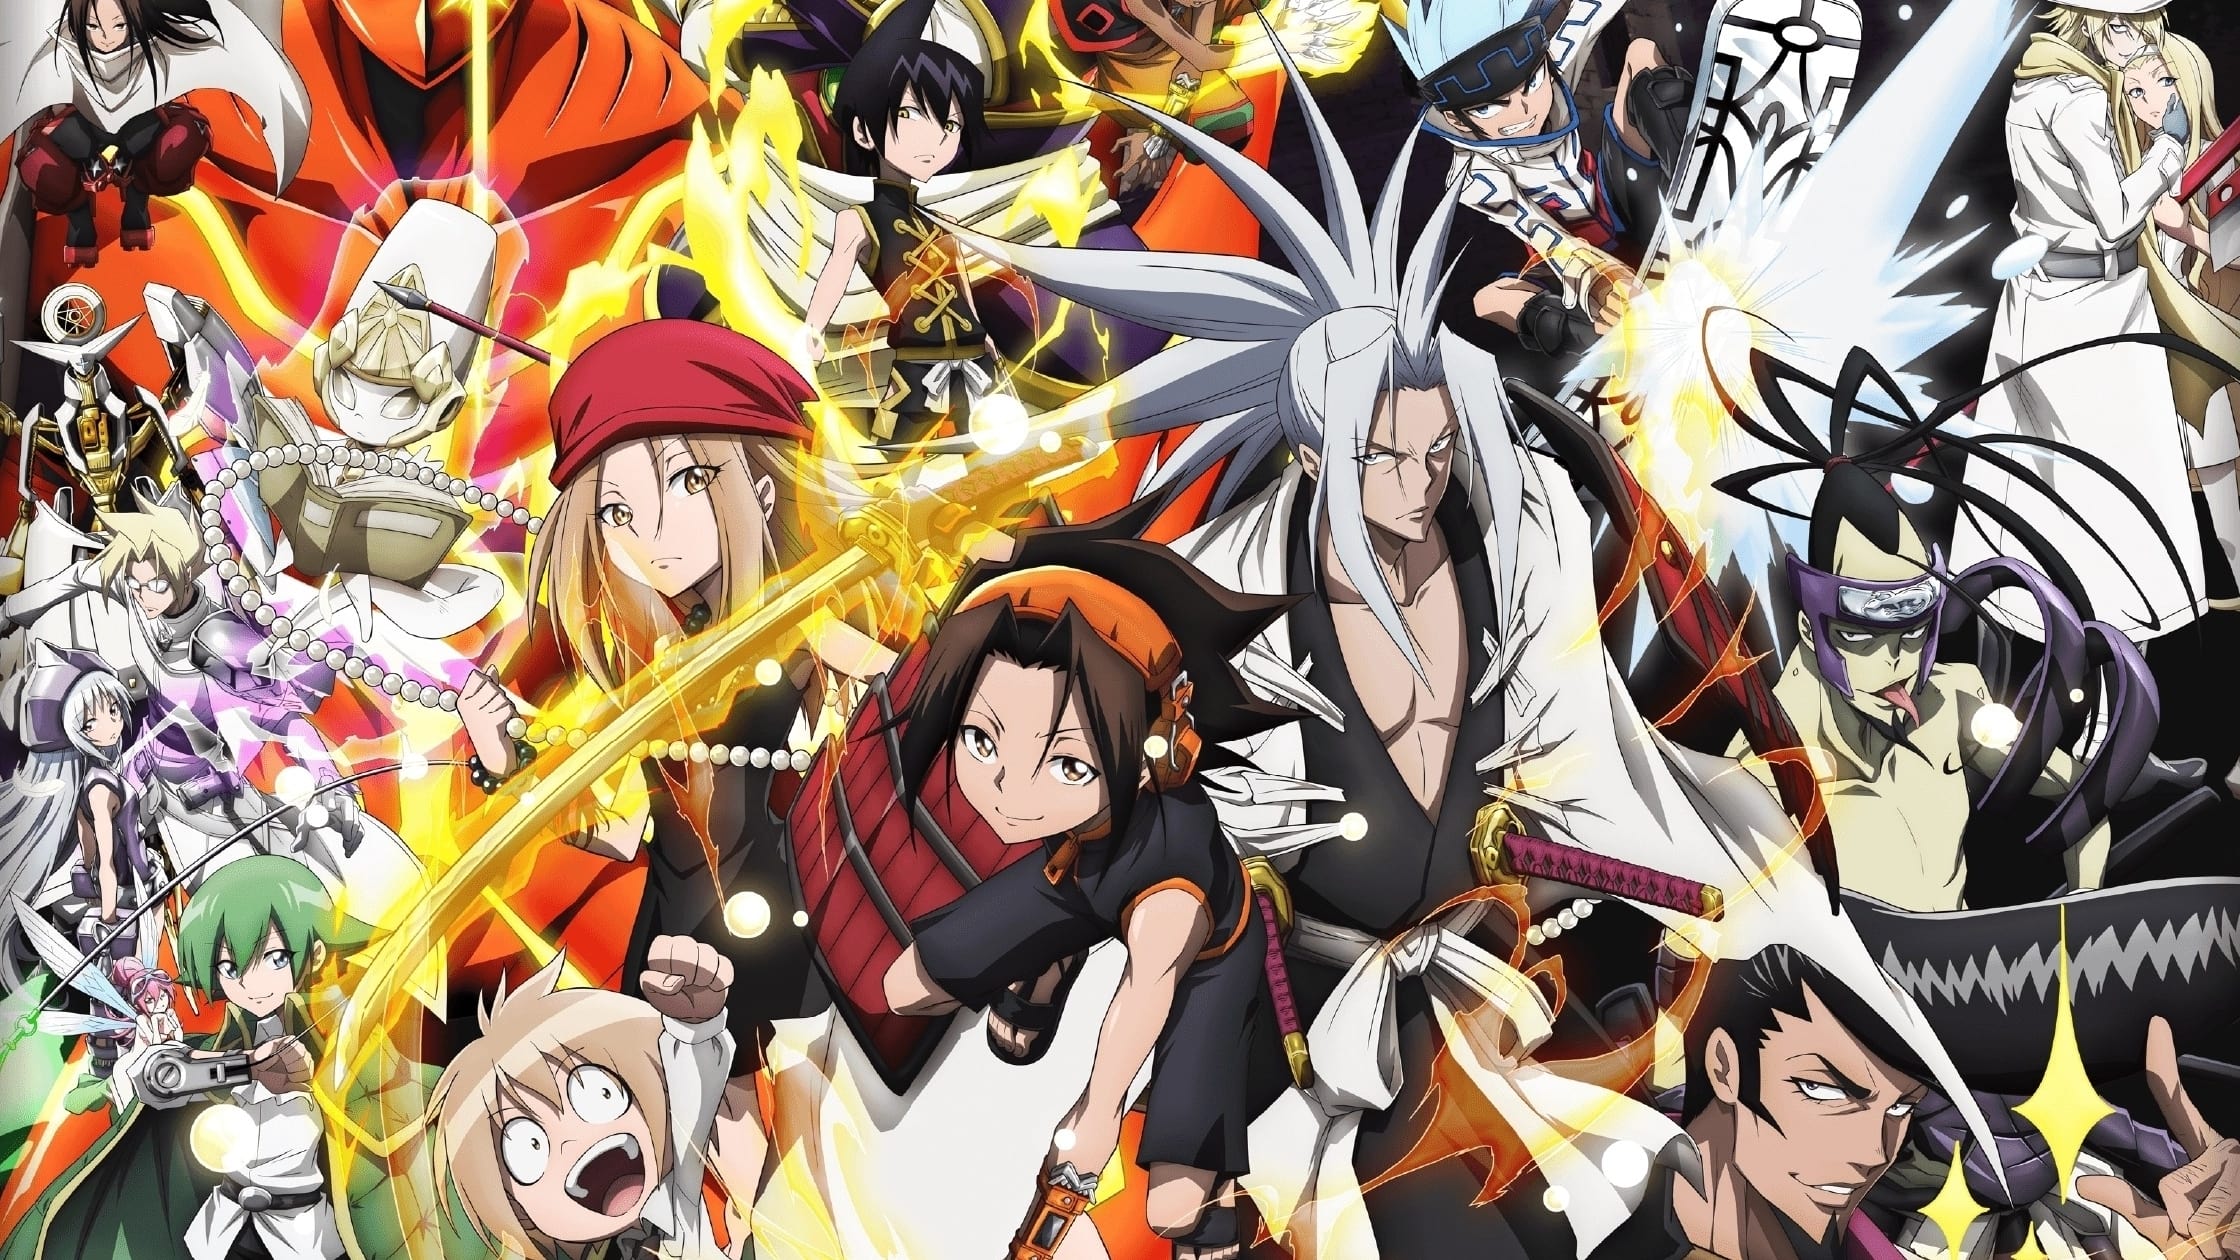 Shaman King Anime Season 1 Part 2 Heads to Netflix Next Week